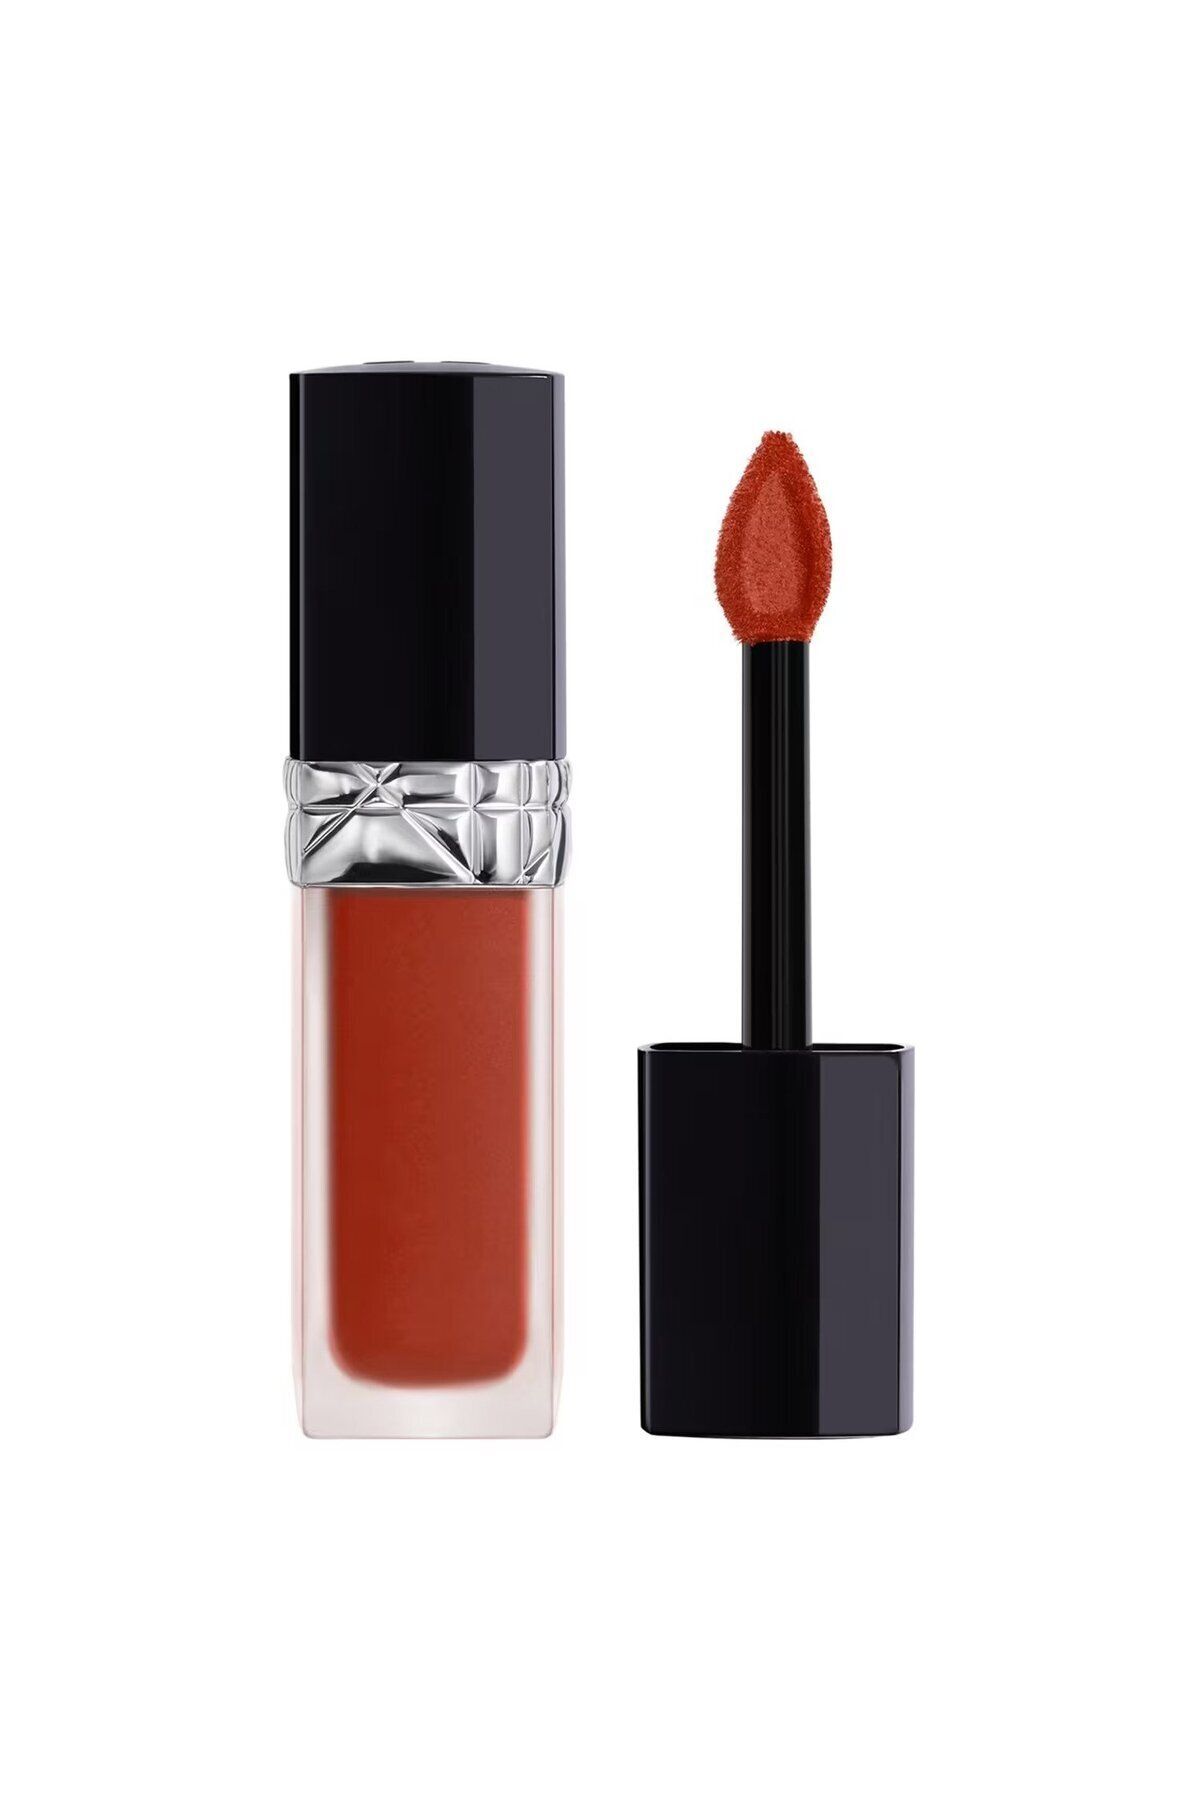 Dior 12 Hours Lasting, Vibrant Matte Finish Liquid Lipstick 6 ml-626 - Famous